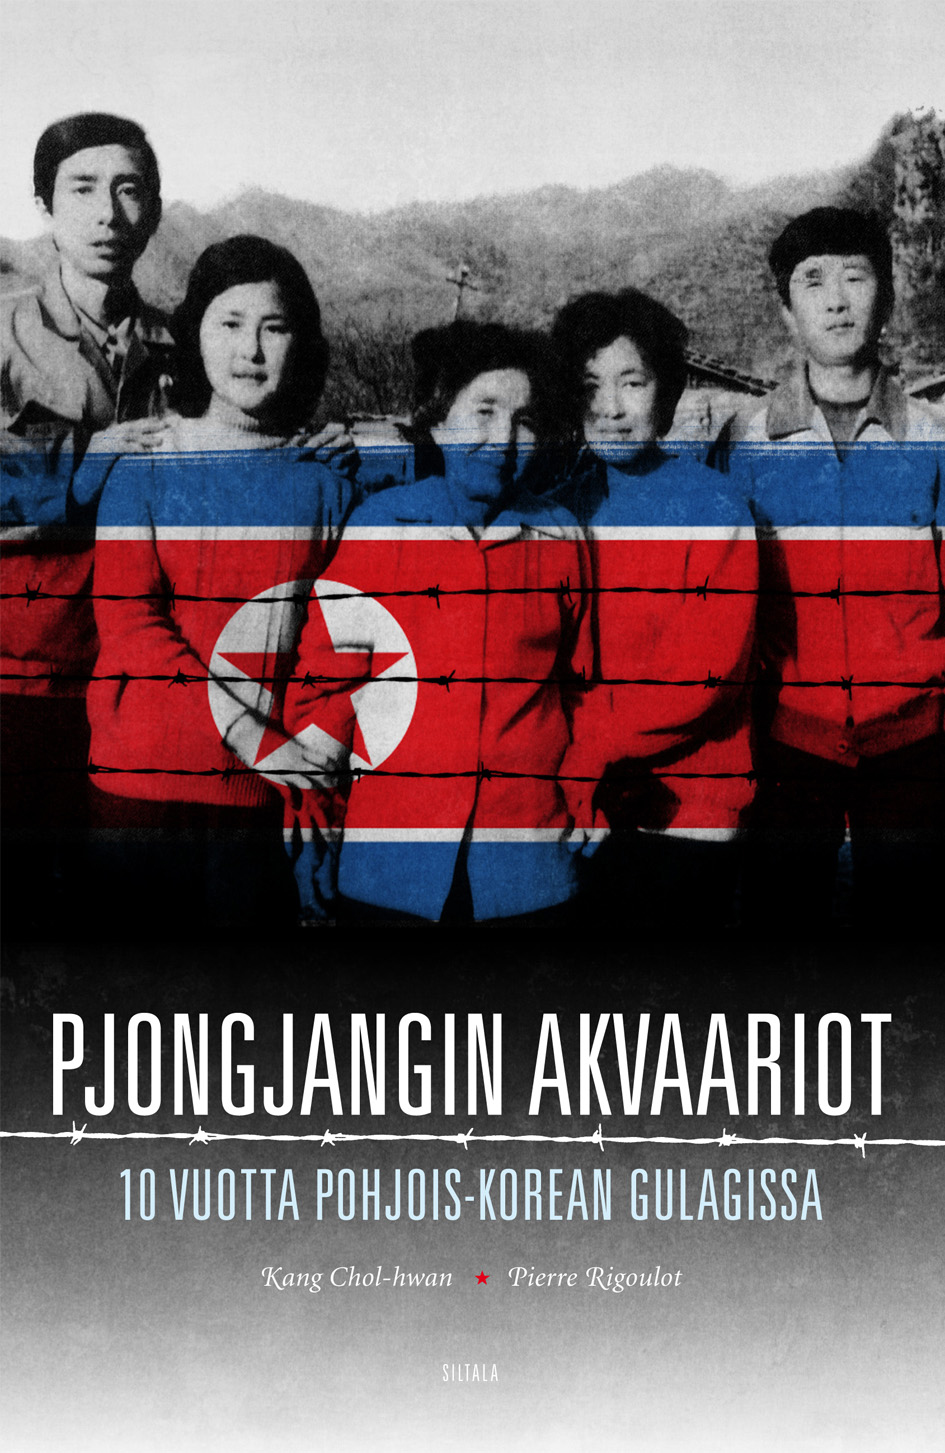 Kang Chol-hwan, Pierre Rigoulet, Lotta Toivanen: Pjongjangin akvaariot (Paperback, Finnish language, 2009, Siltala)